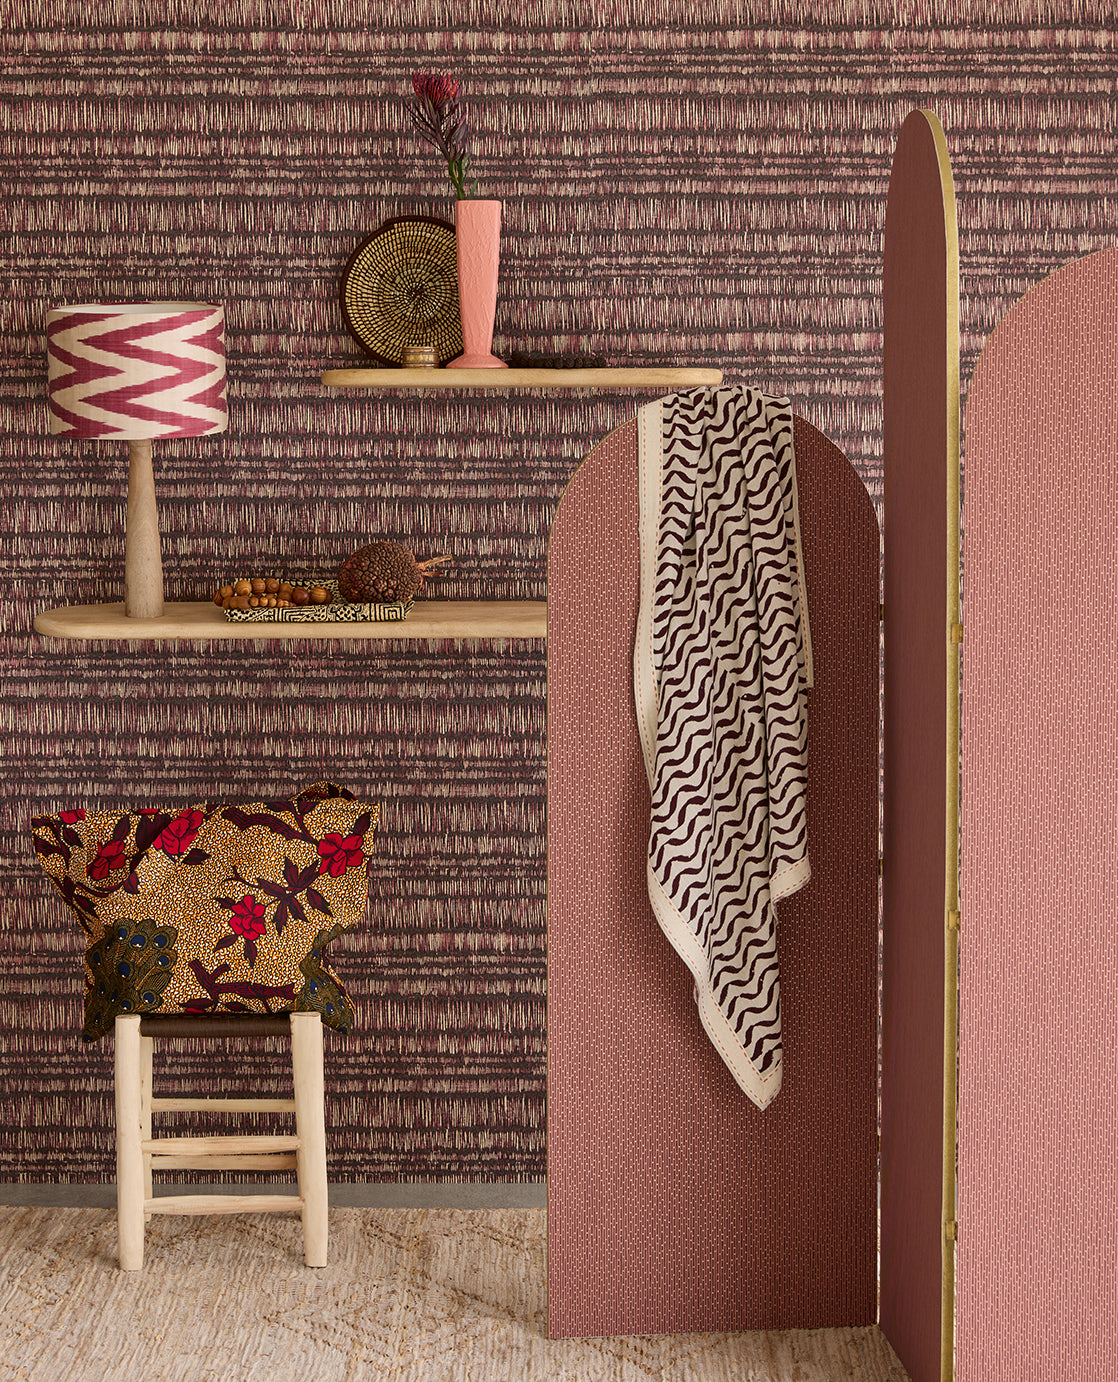 Solange Raffia Weave wallpaper